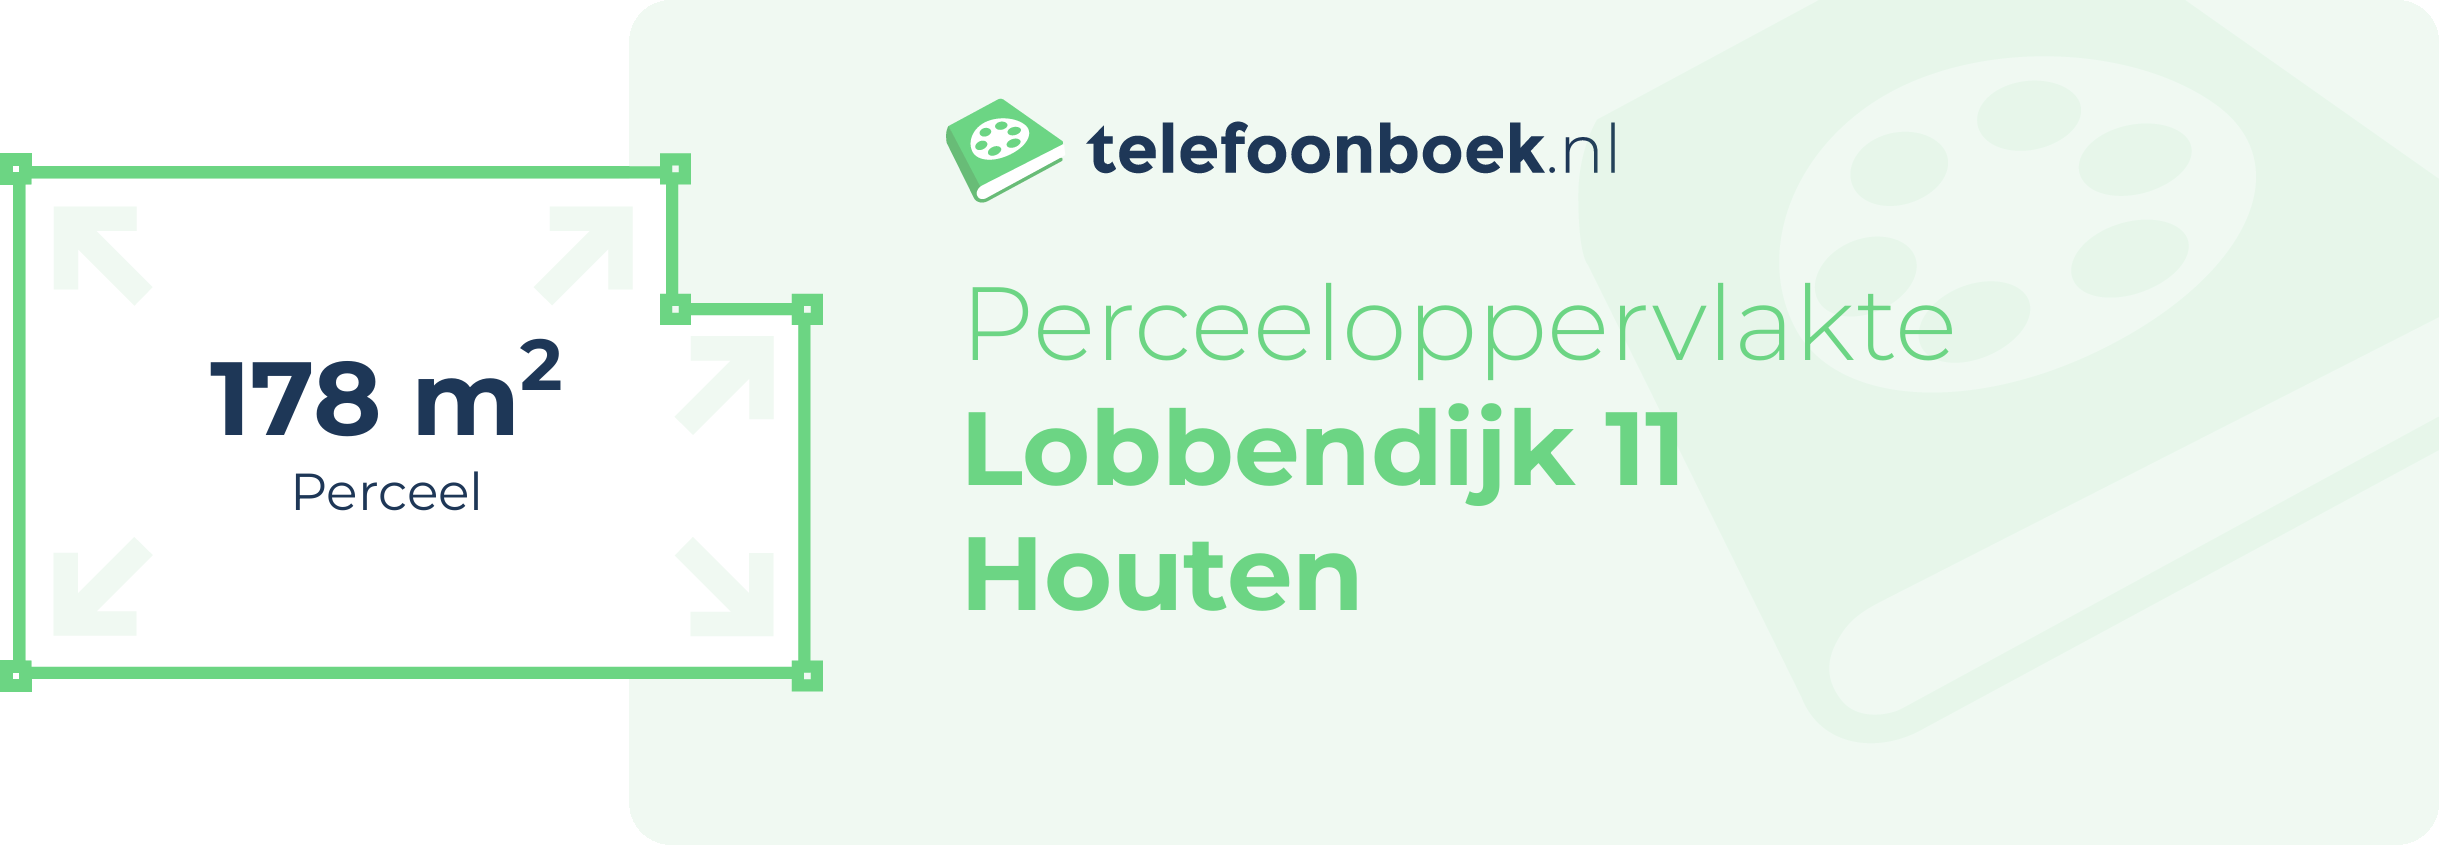 Perceeloppervlakte Lobbendijk 11 Houten